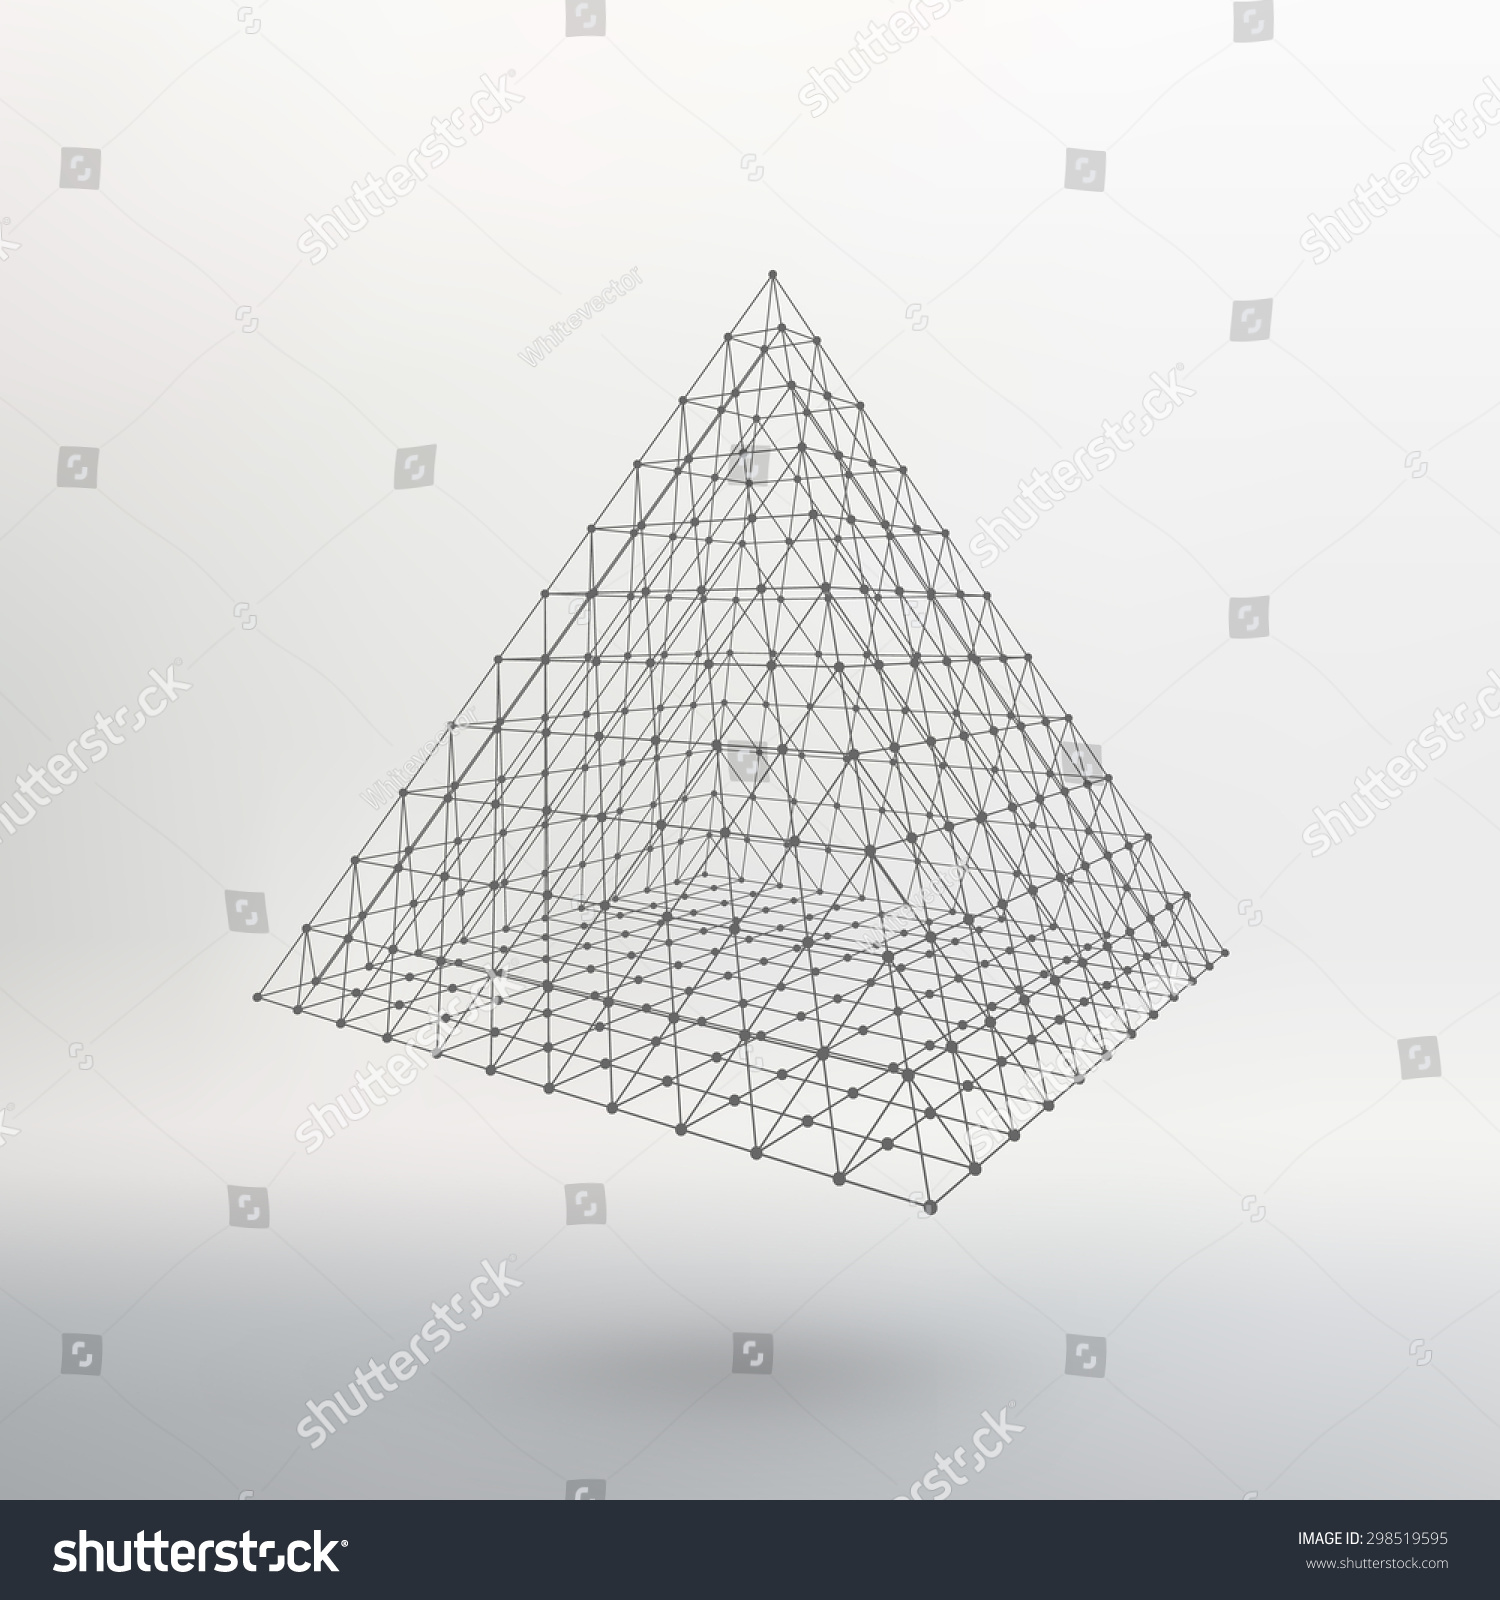 Polygonal pyramid. Pyramid of the lines - Royalty Free Stock Vector ...